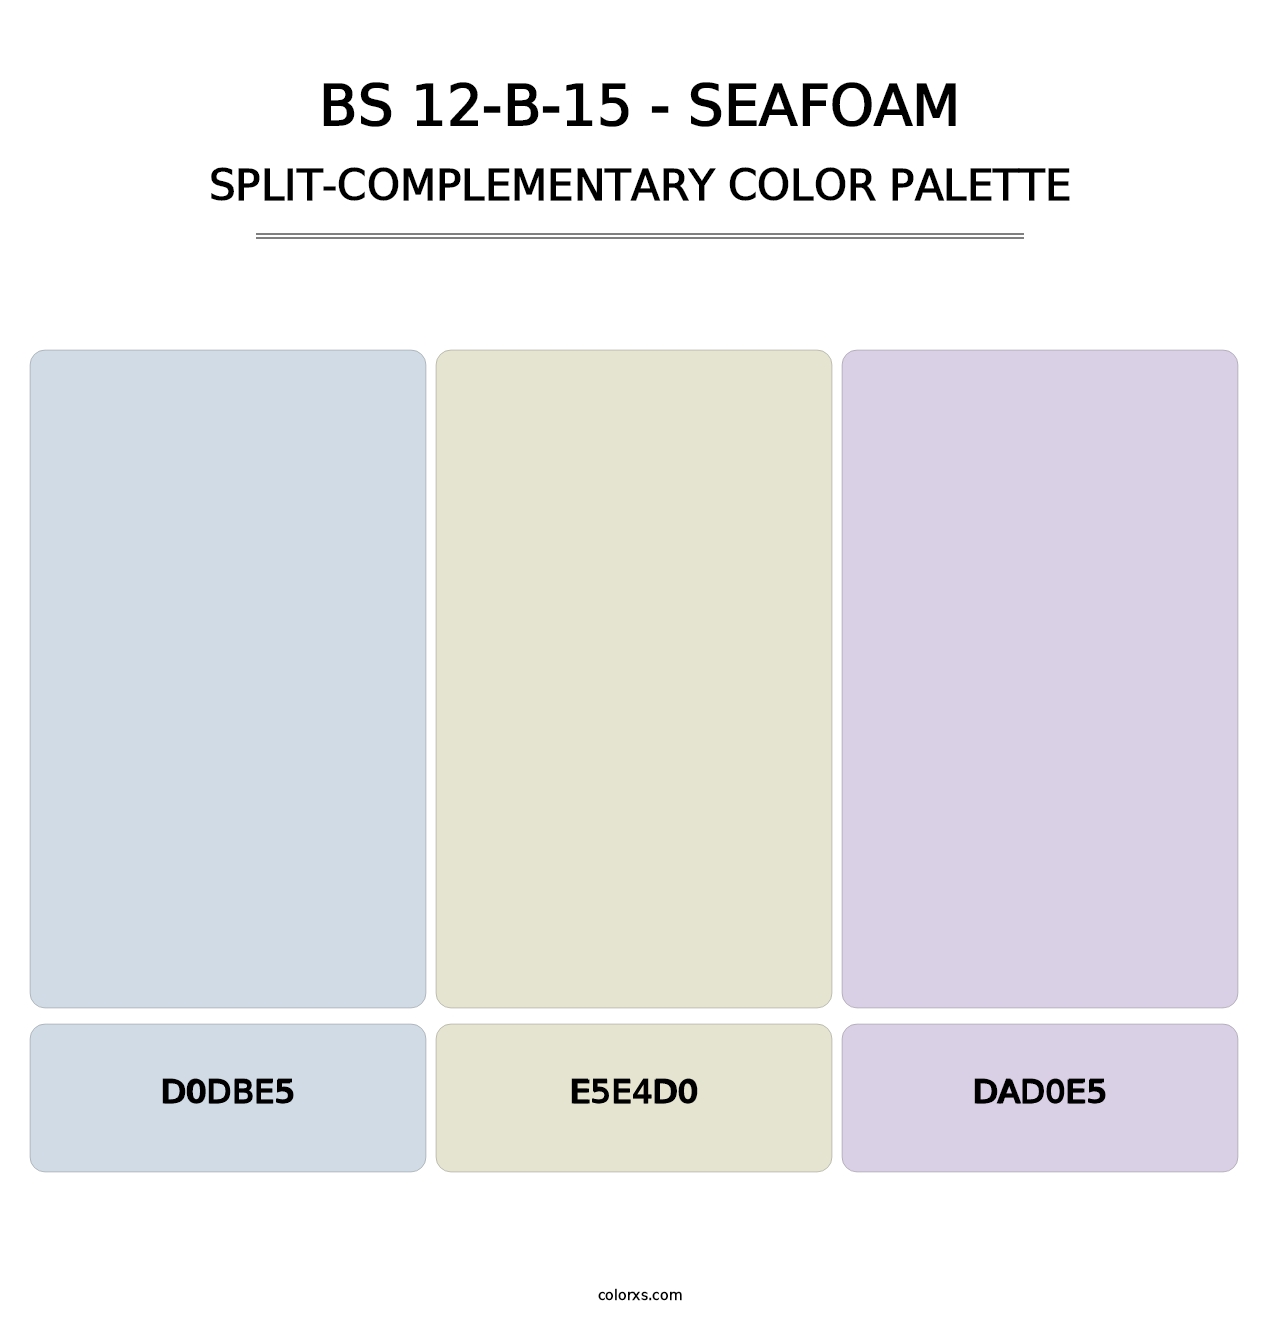 BS 12-B-15 - Seafoam - Split-Complementary Color Palette